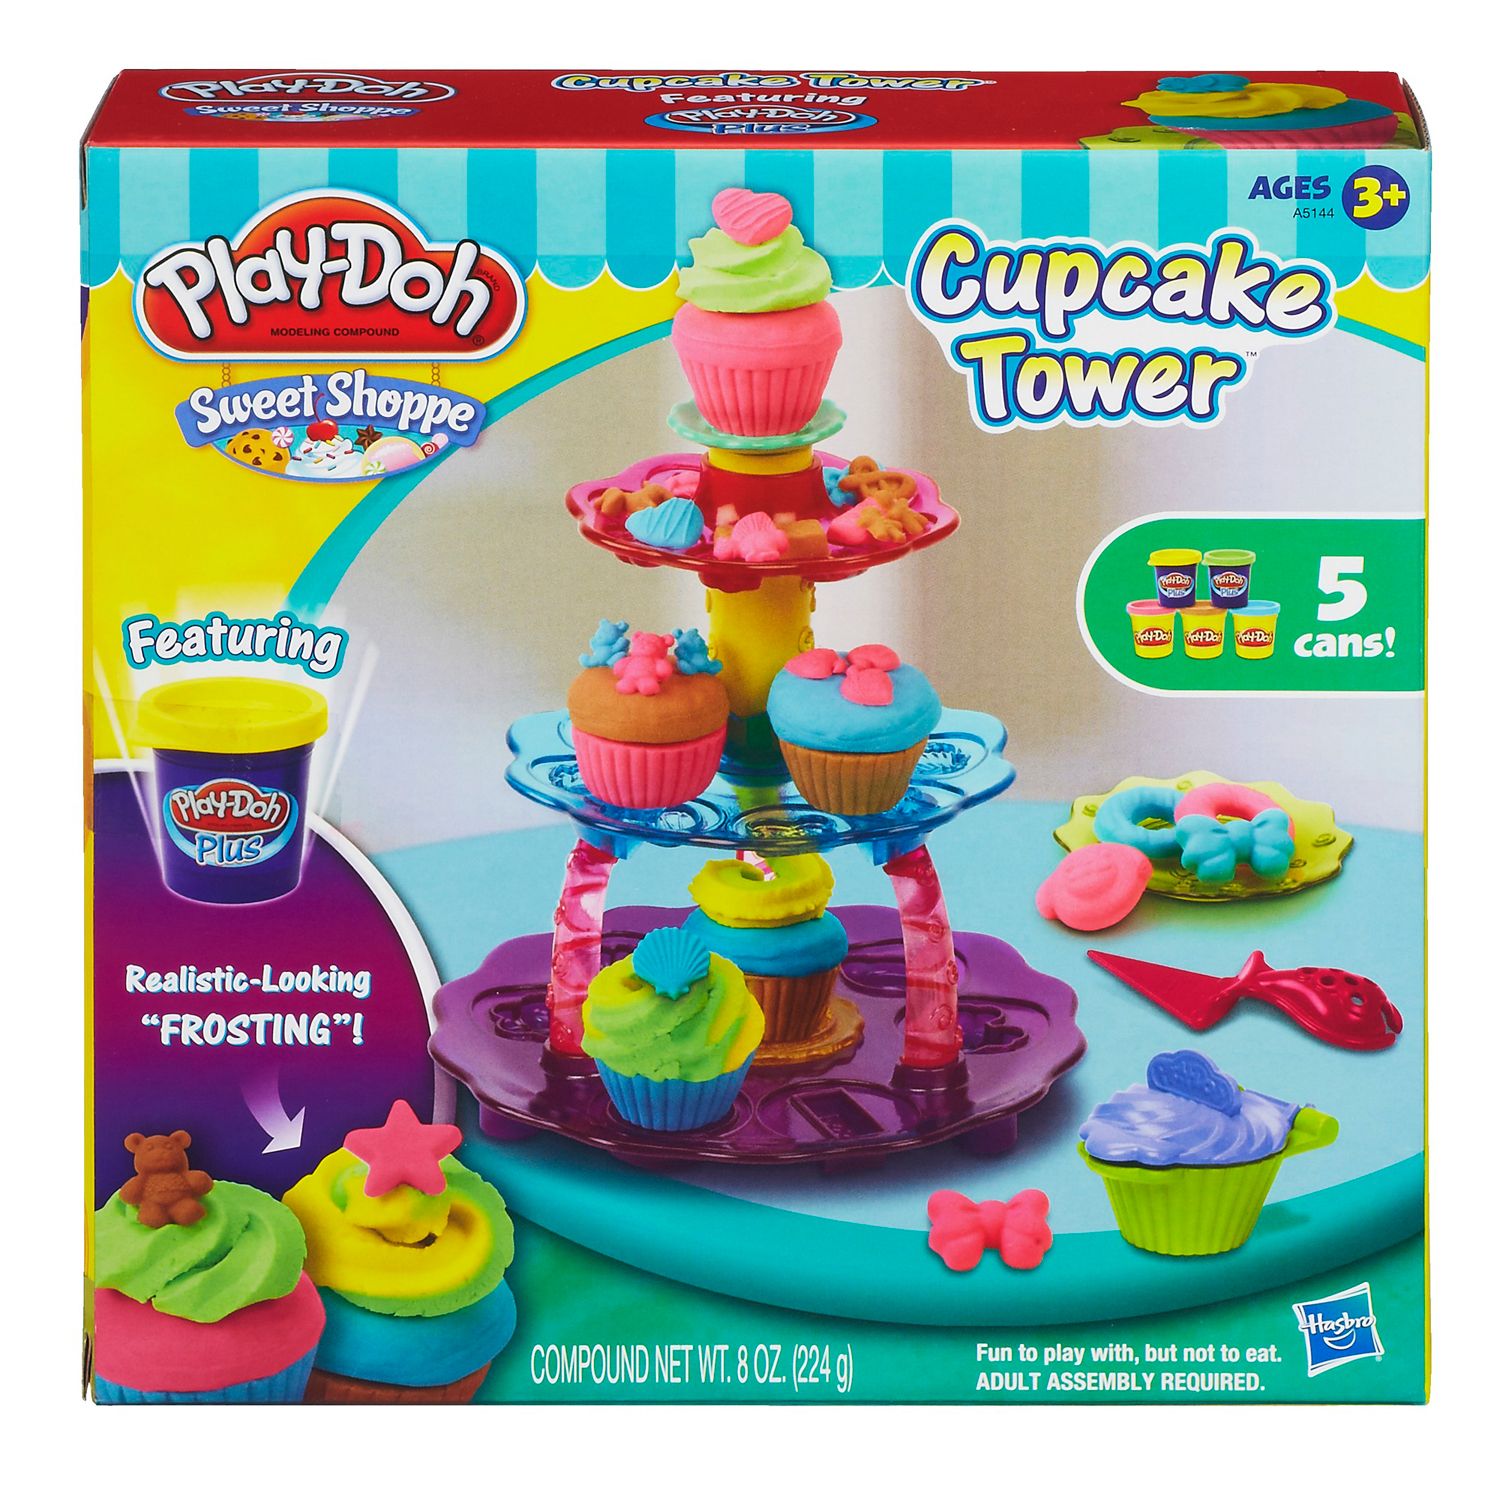 cupcake play set